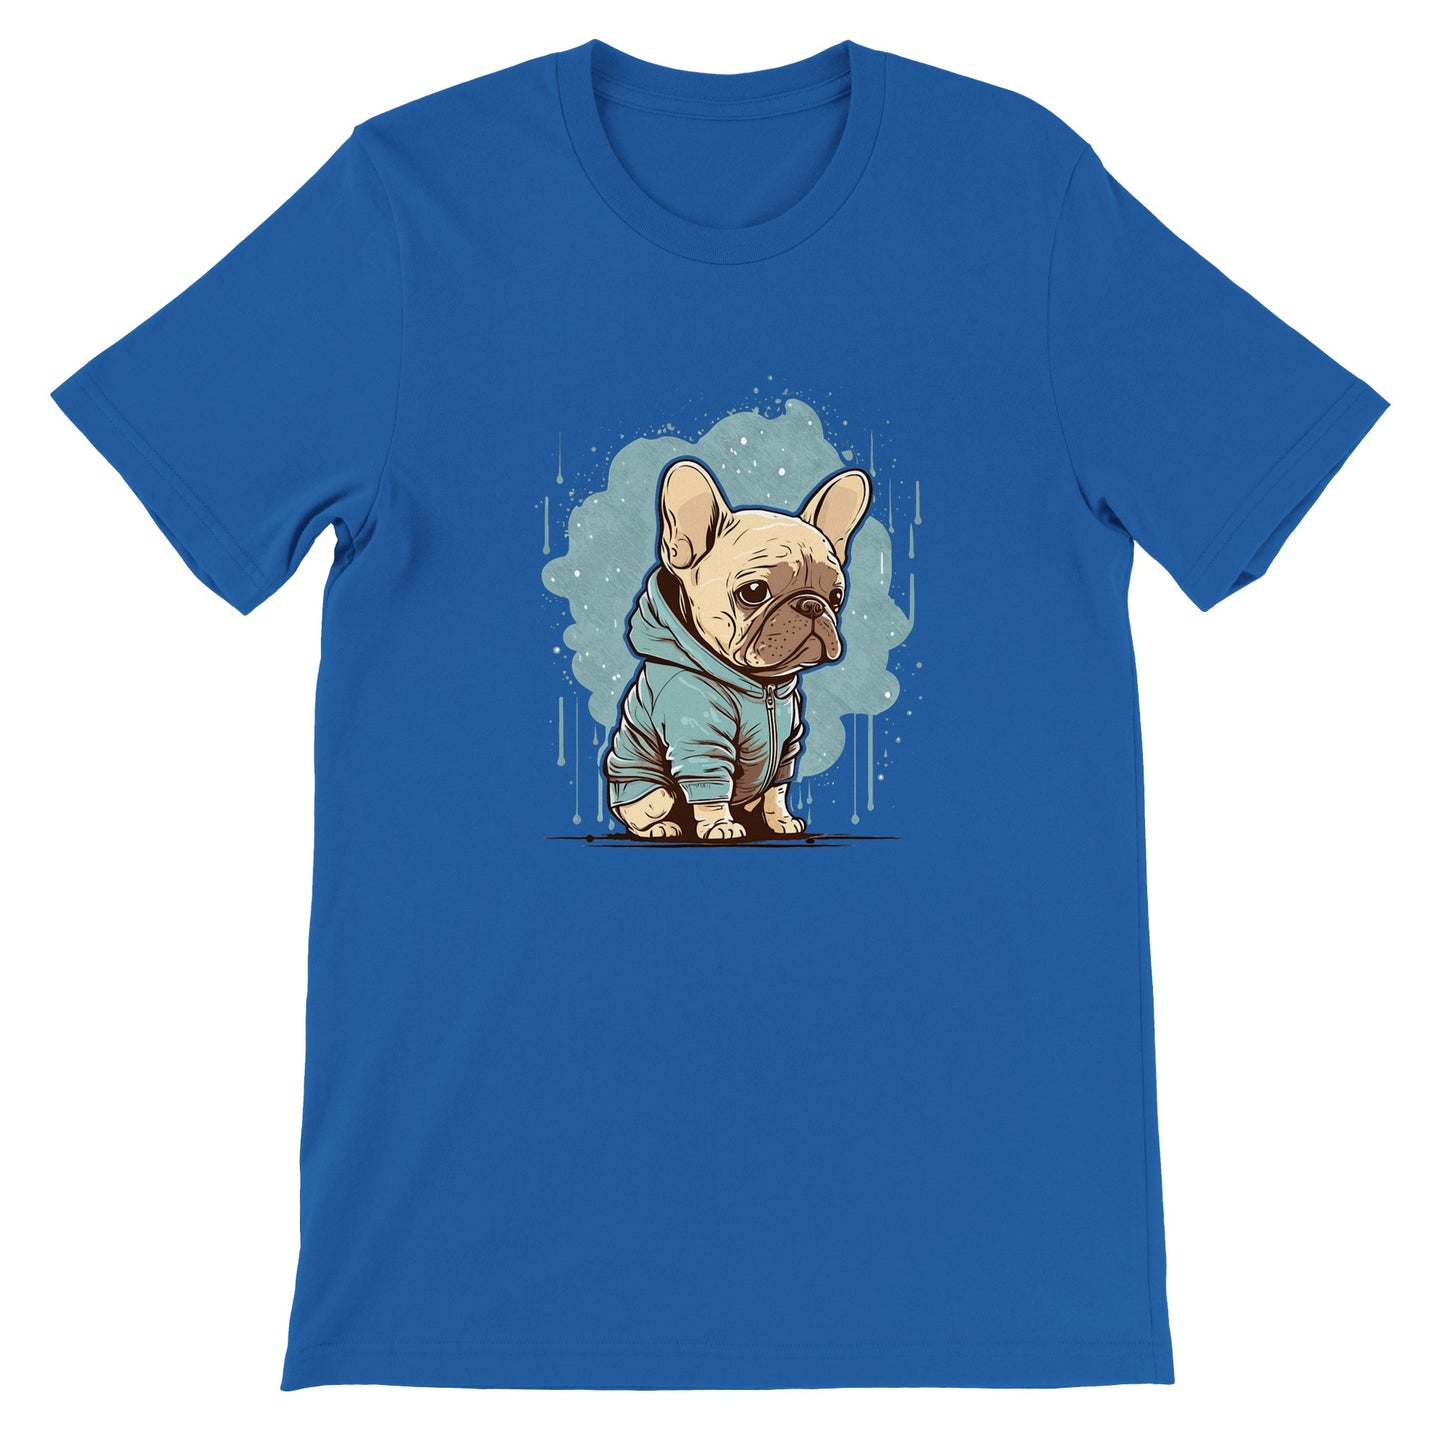 Dog T-shirt - Light French Bulldog Light T-shirt Artwork - Premium Unisex T-shirt